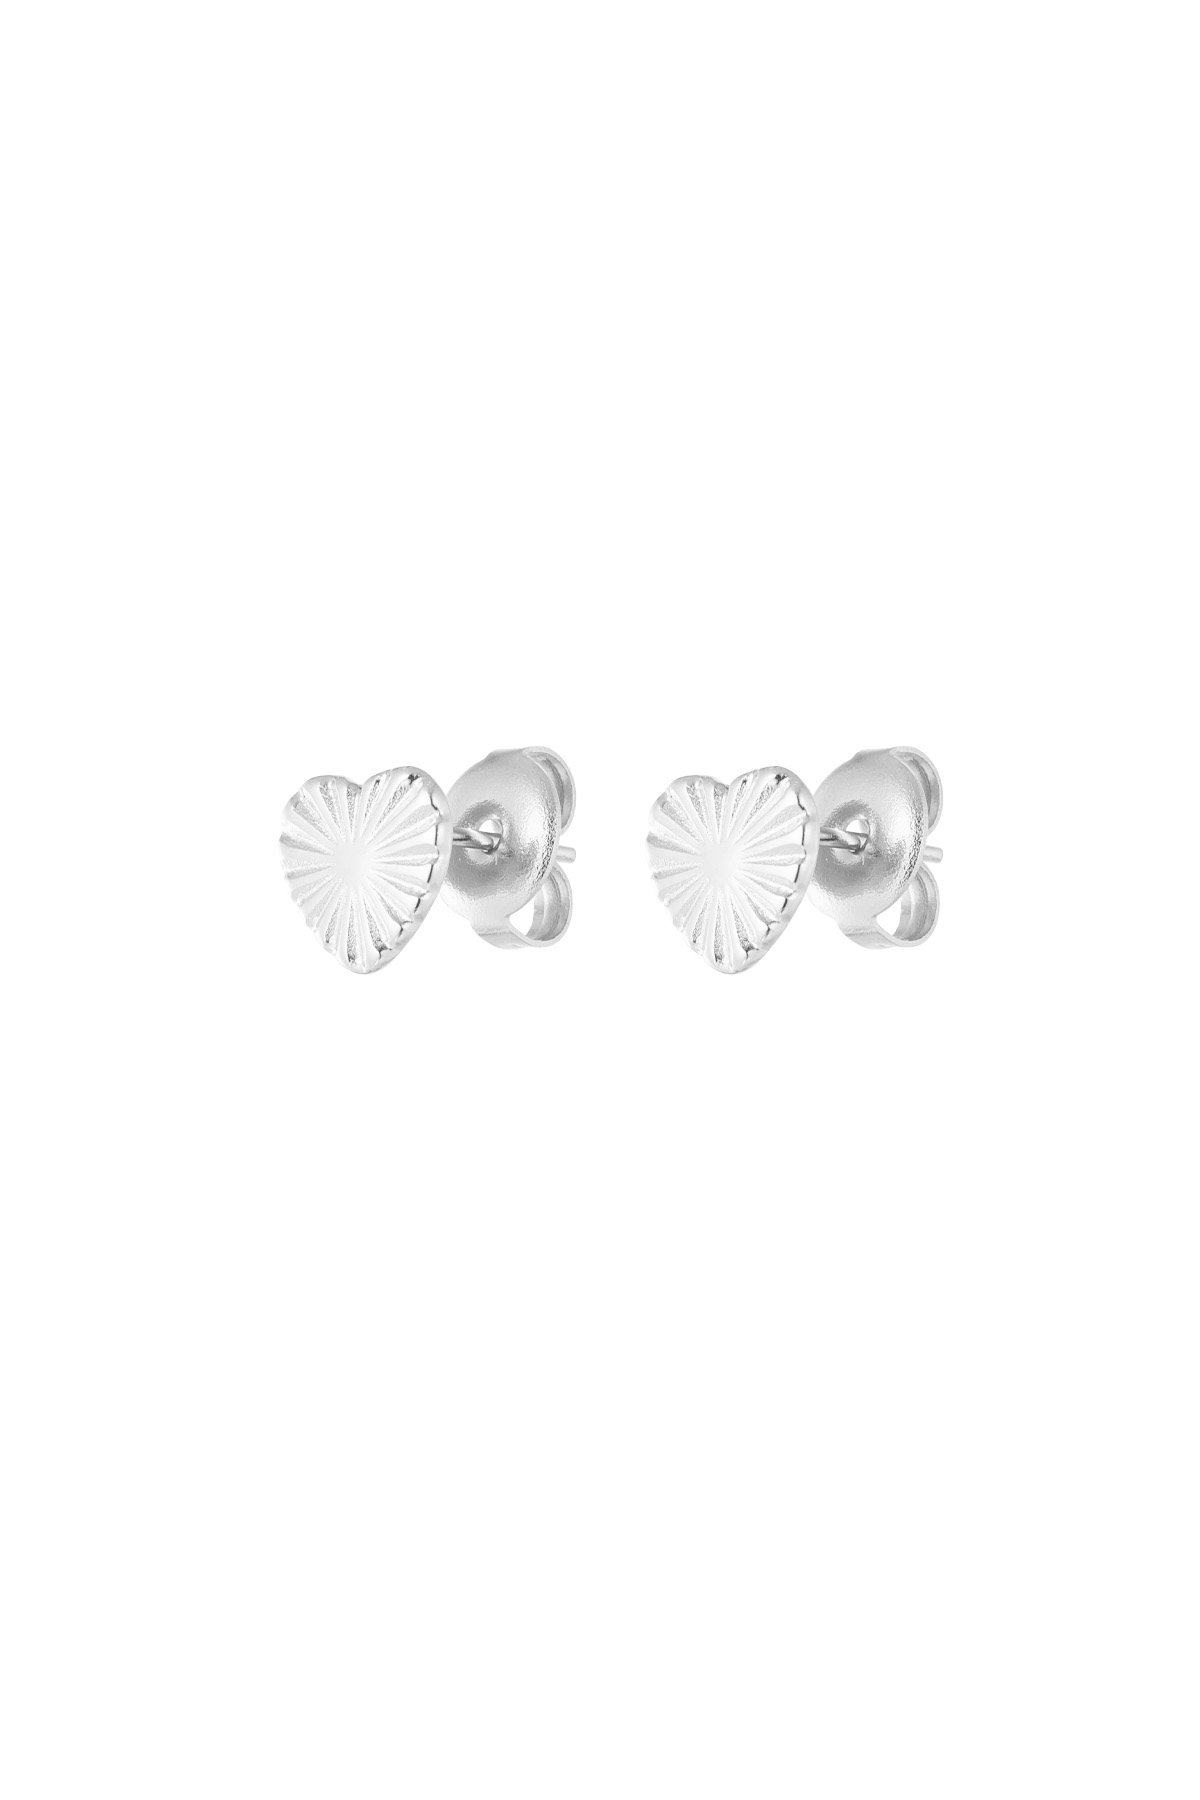 Heart shaped earrings with pattern - silver